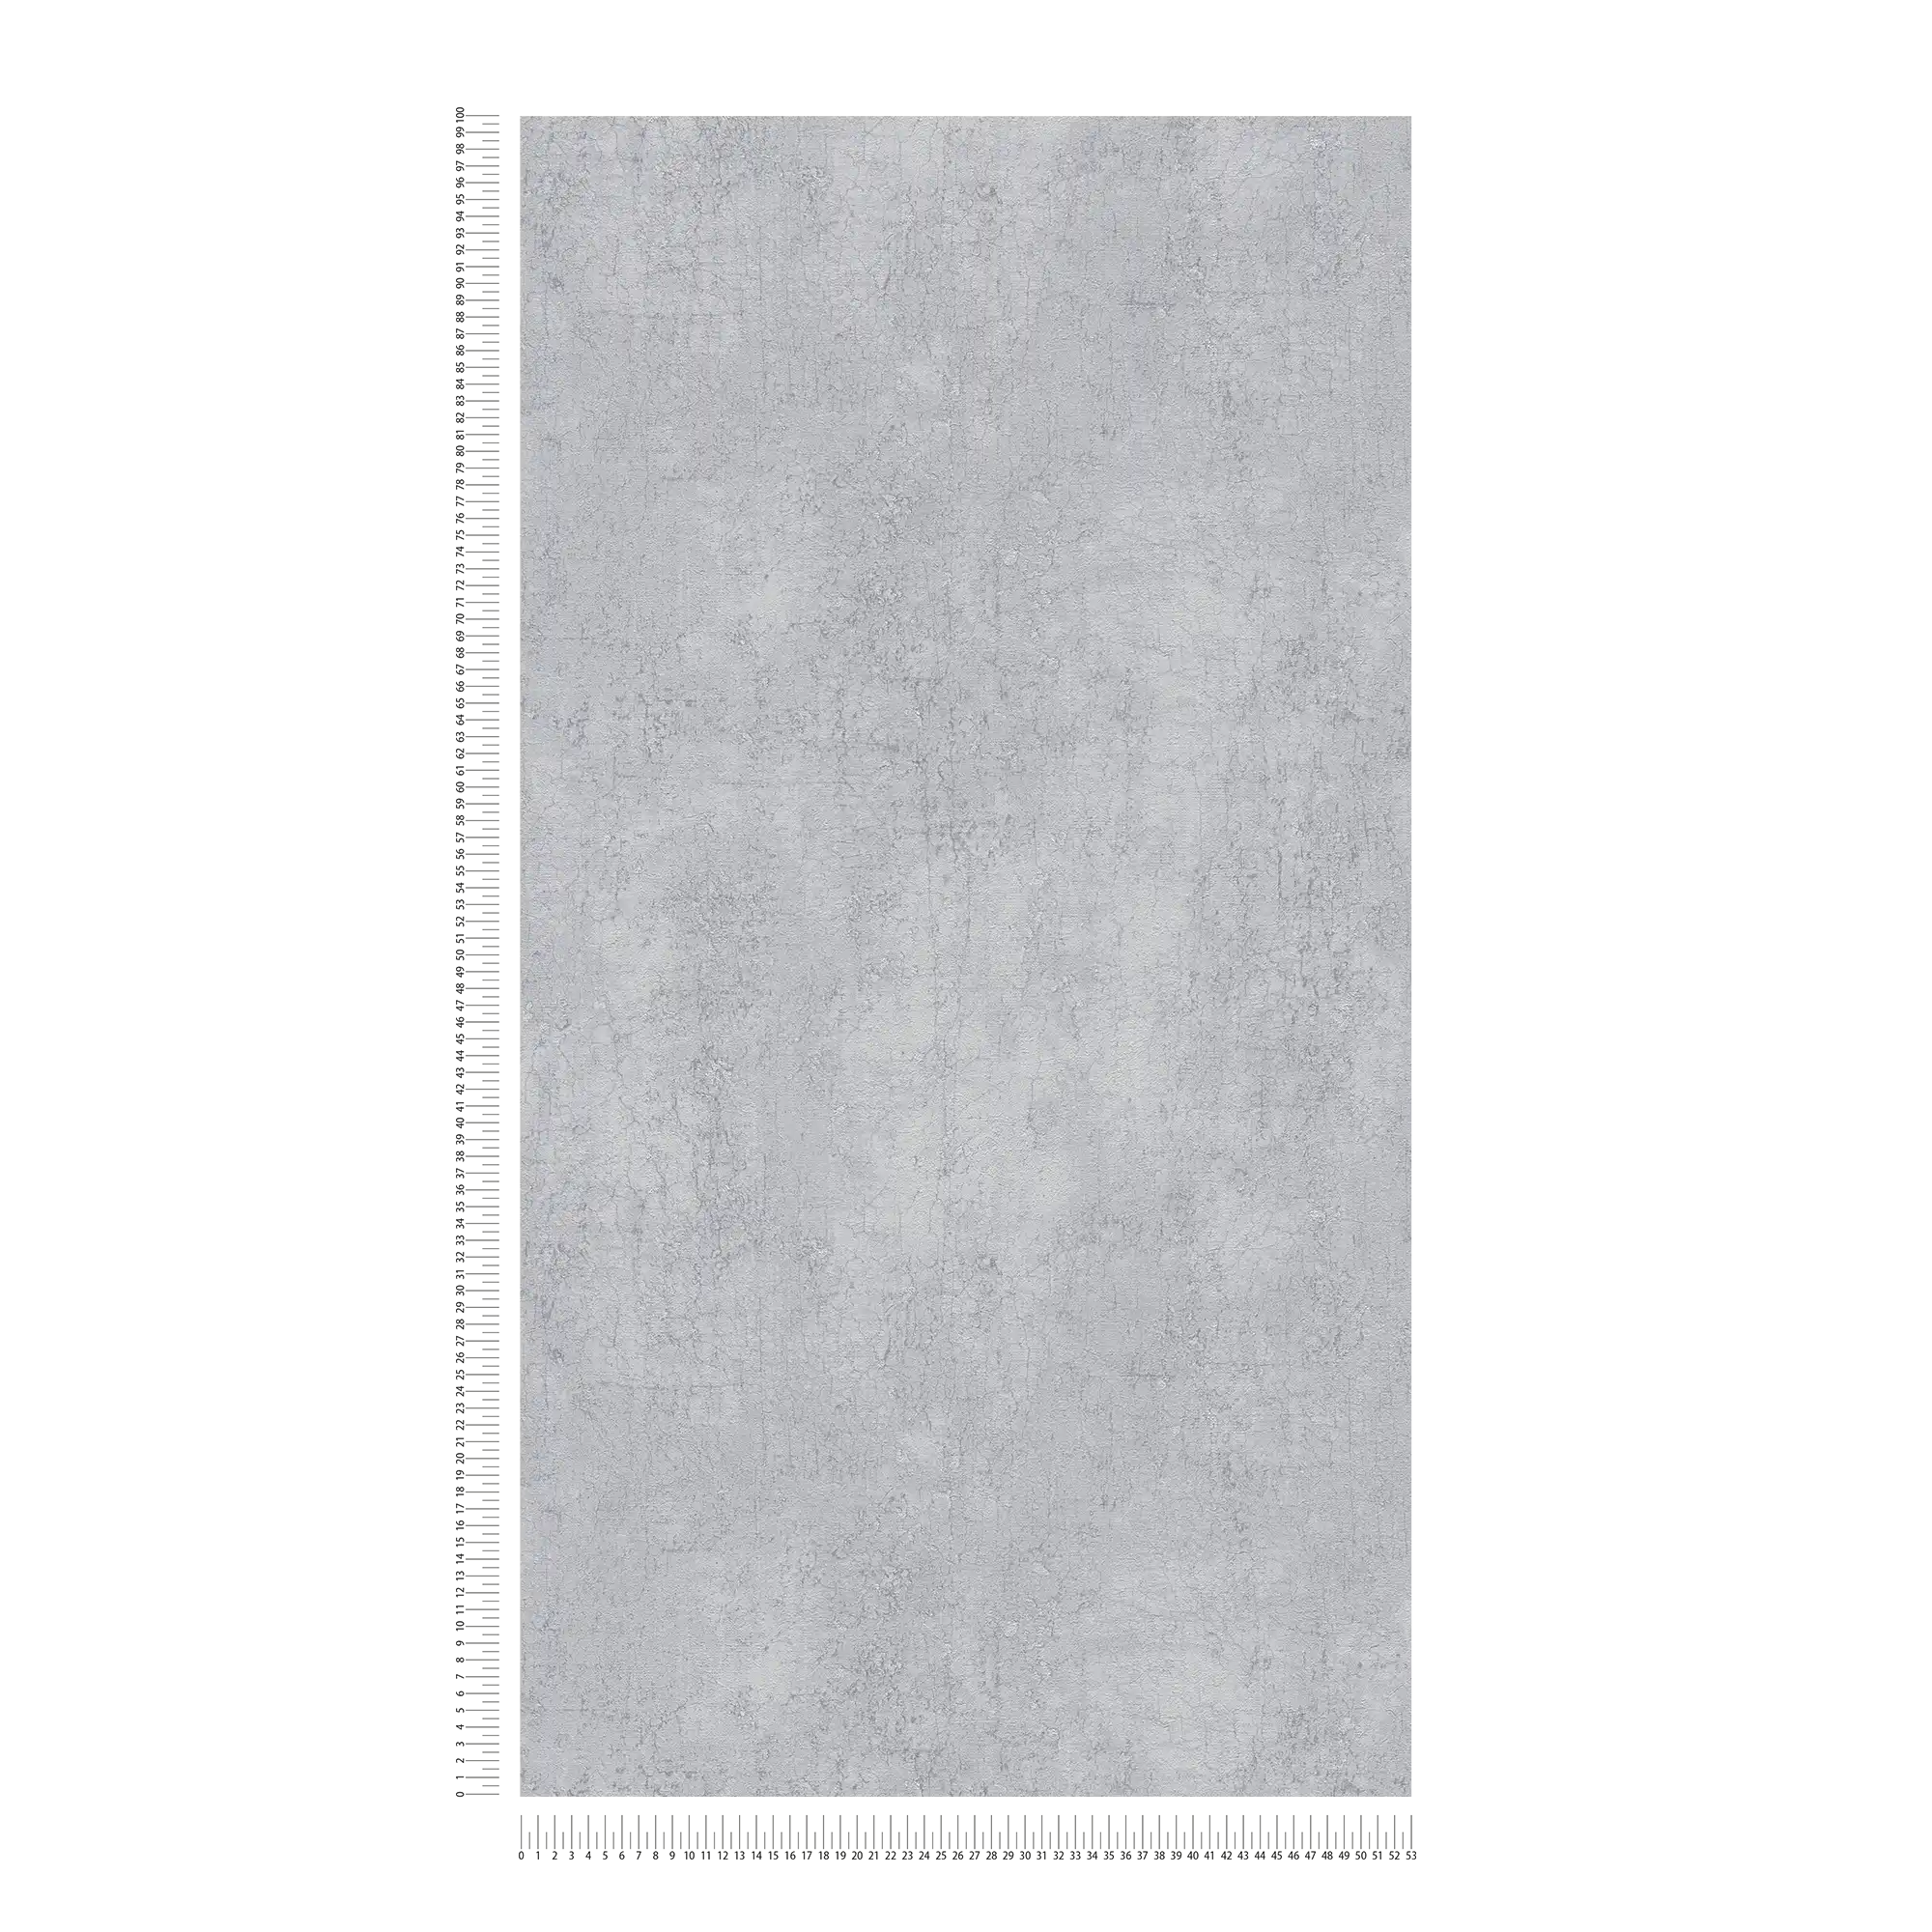             Putzoptik Tapete Steingrau mit Silber Akzenten – Grau, Metallic
        